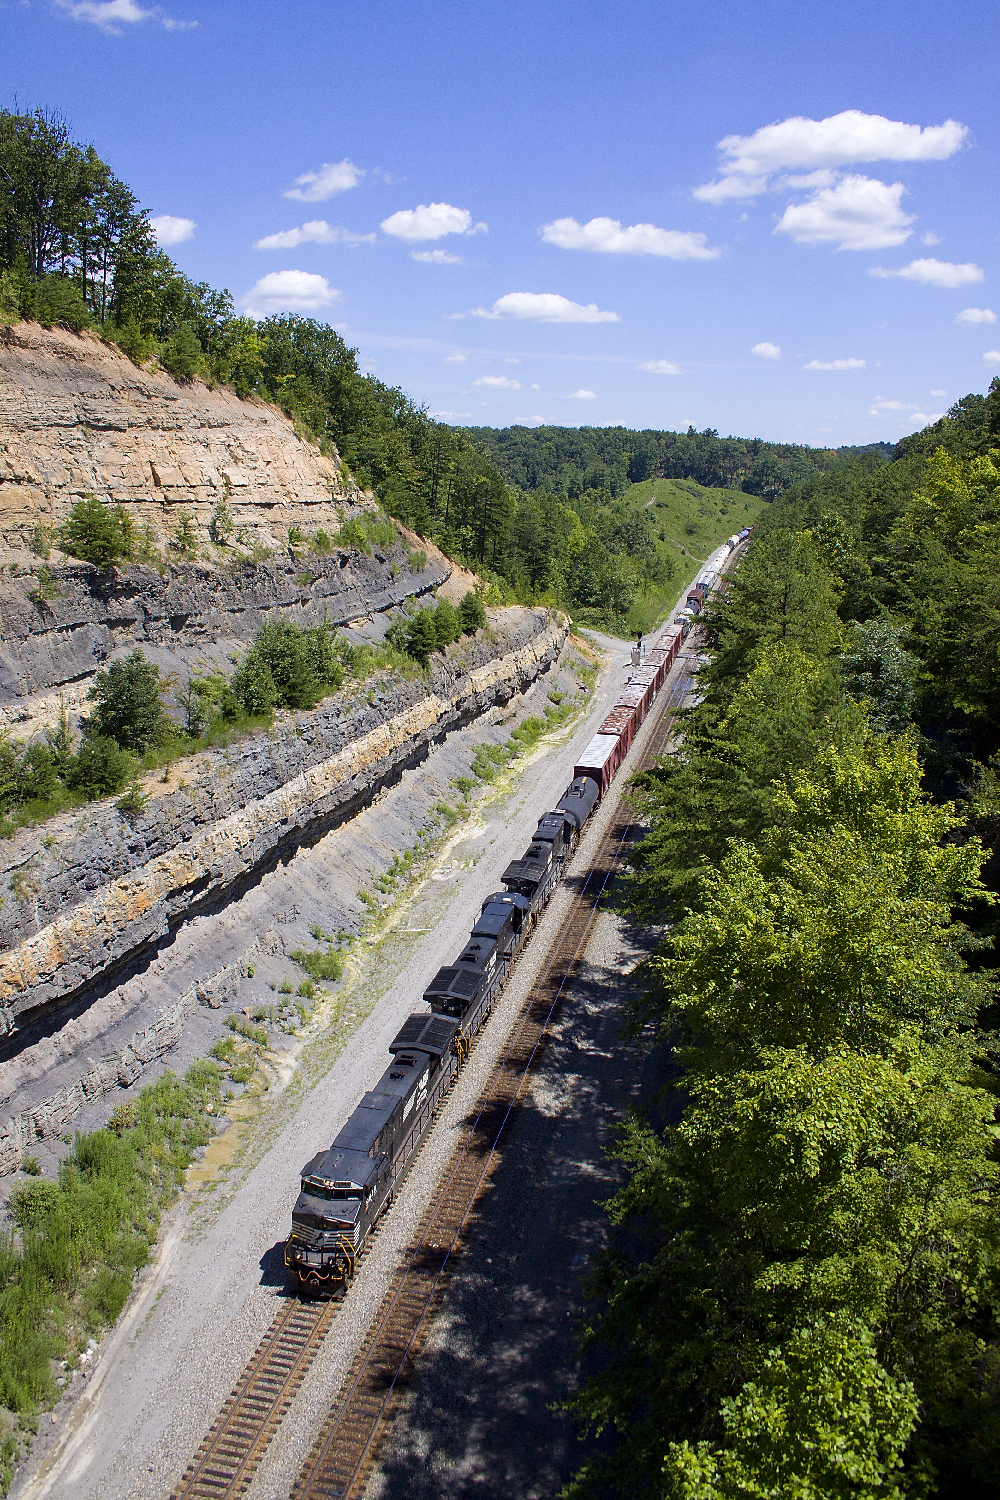 A $1.6B Railway Sale Could Fund Cincinnati's Infrastructure